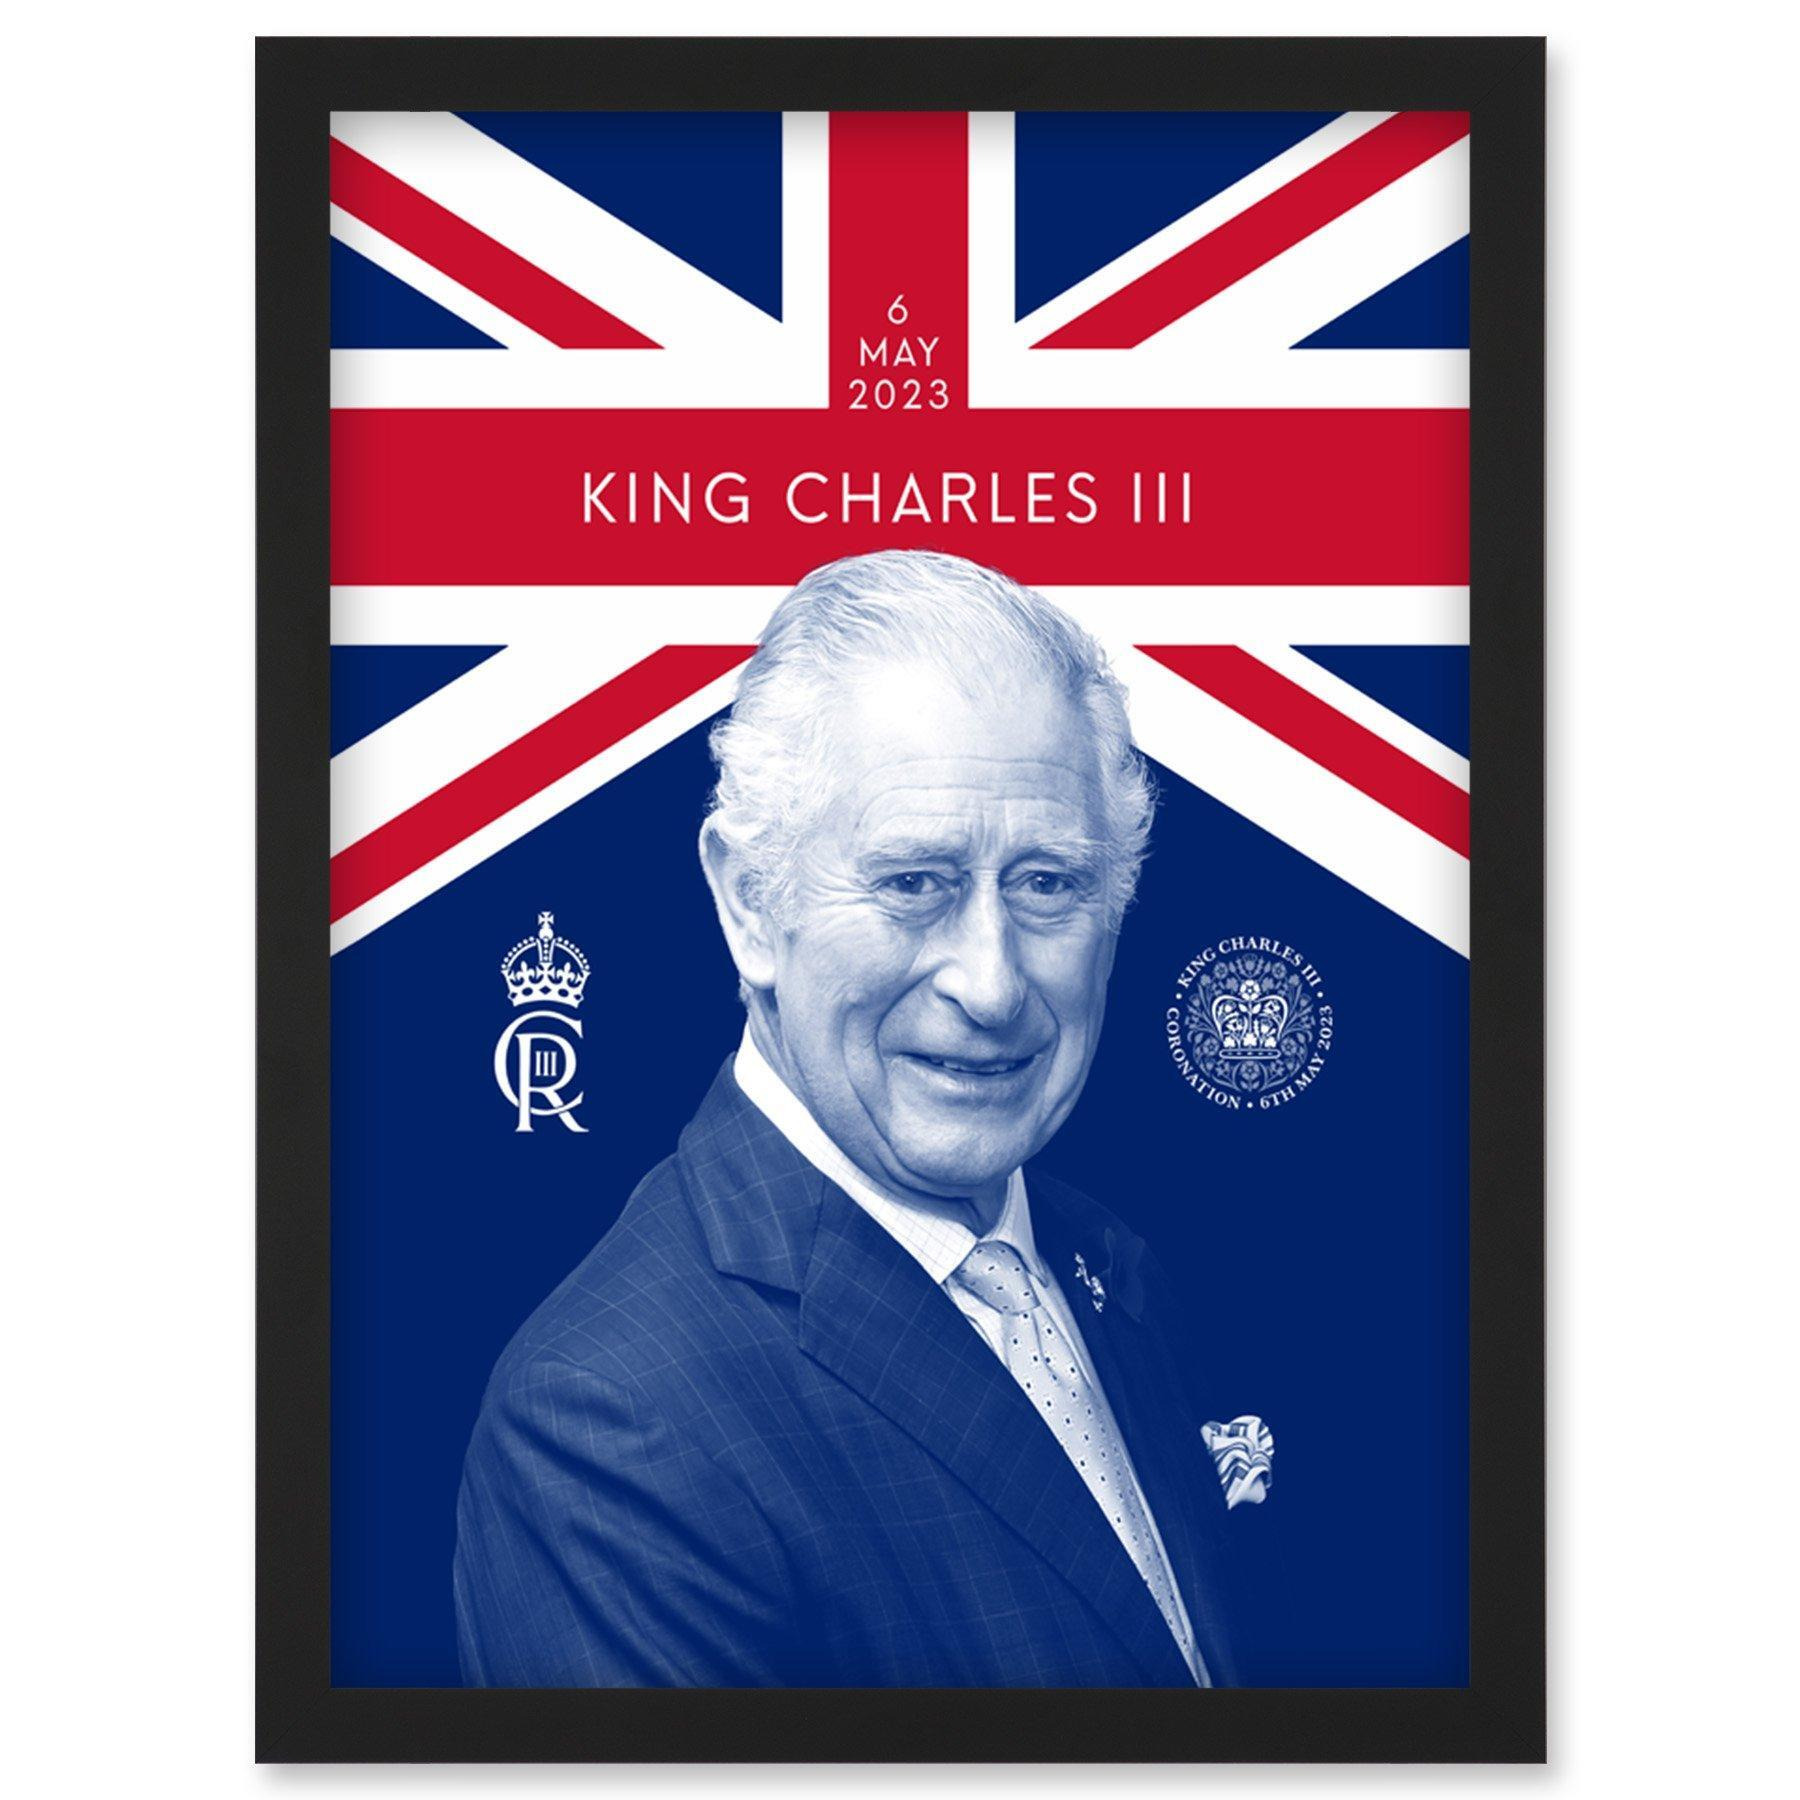 King Charles III Coronation Reigning Under the Union Flag Royal Crest Emblem  Artwork Framed Wall Art Print A4 - image 1